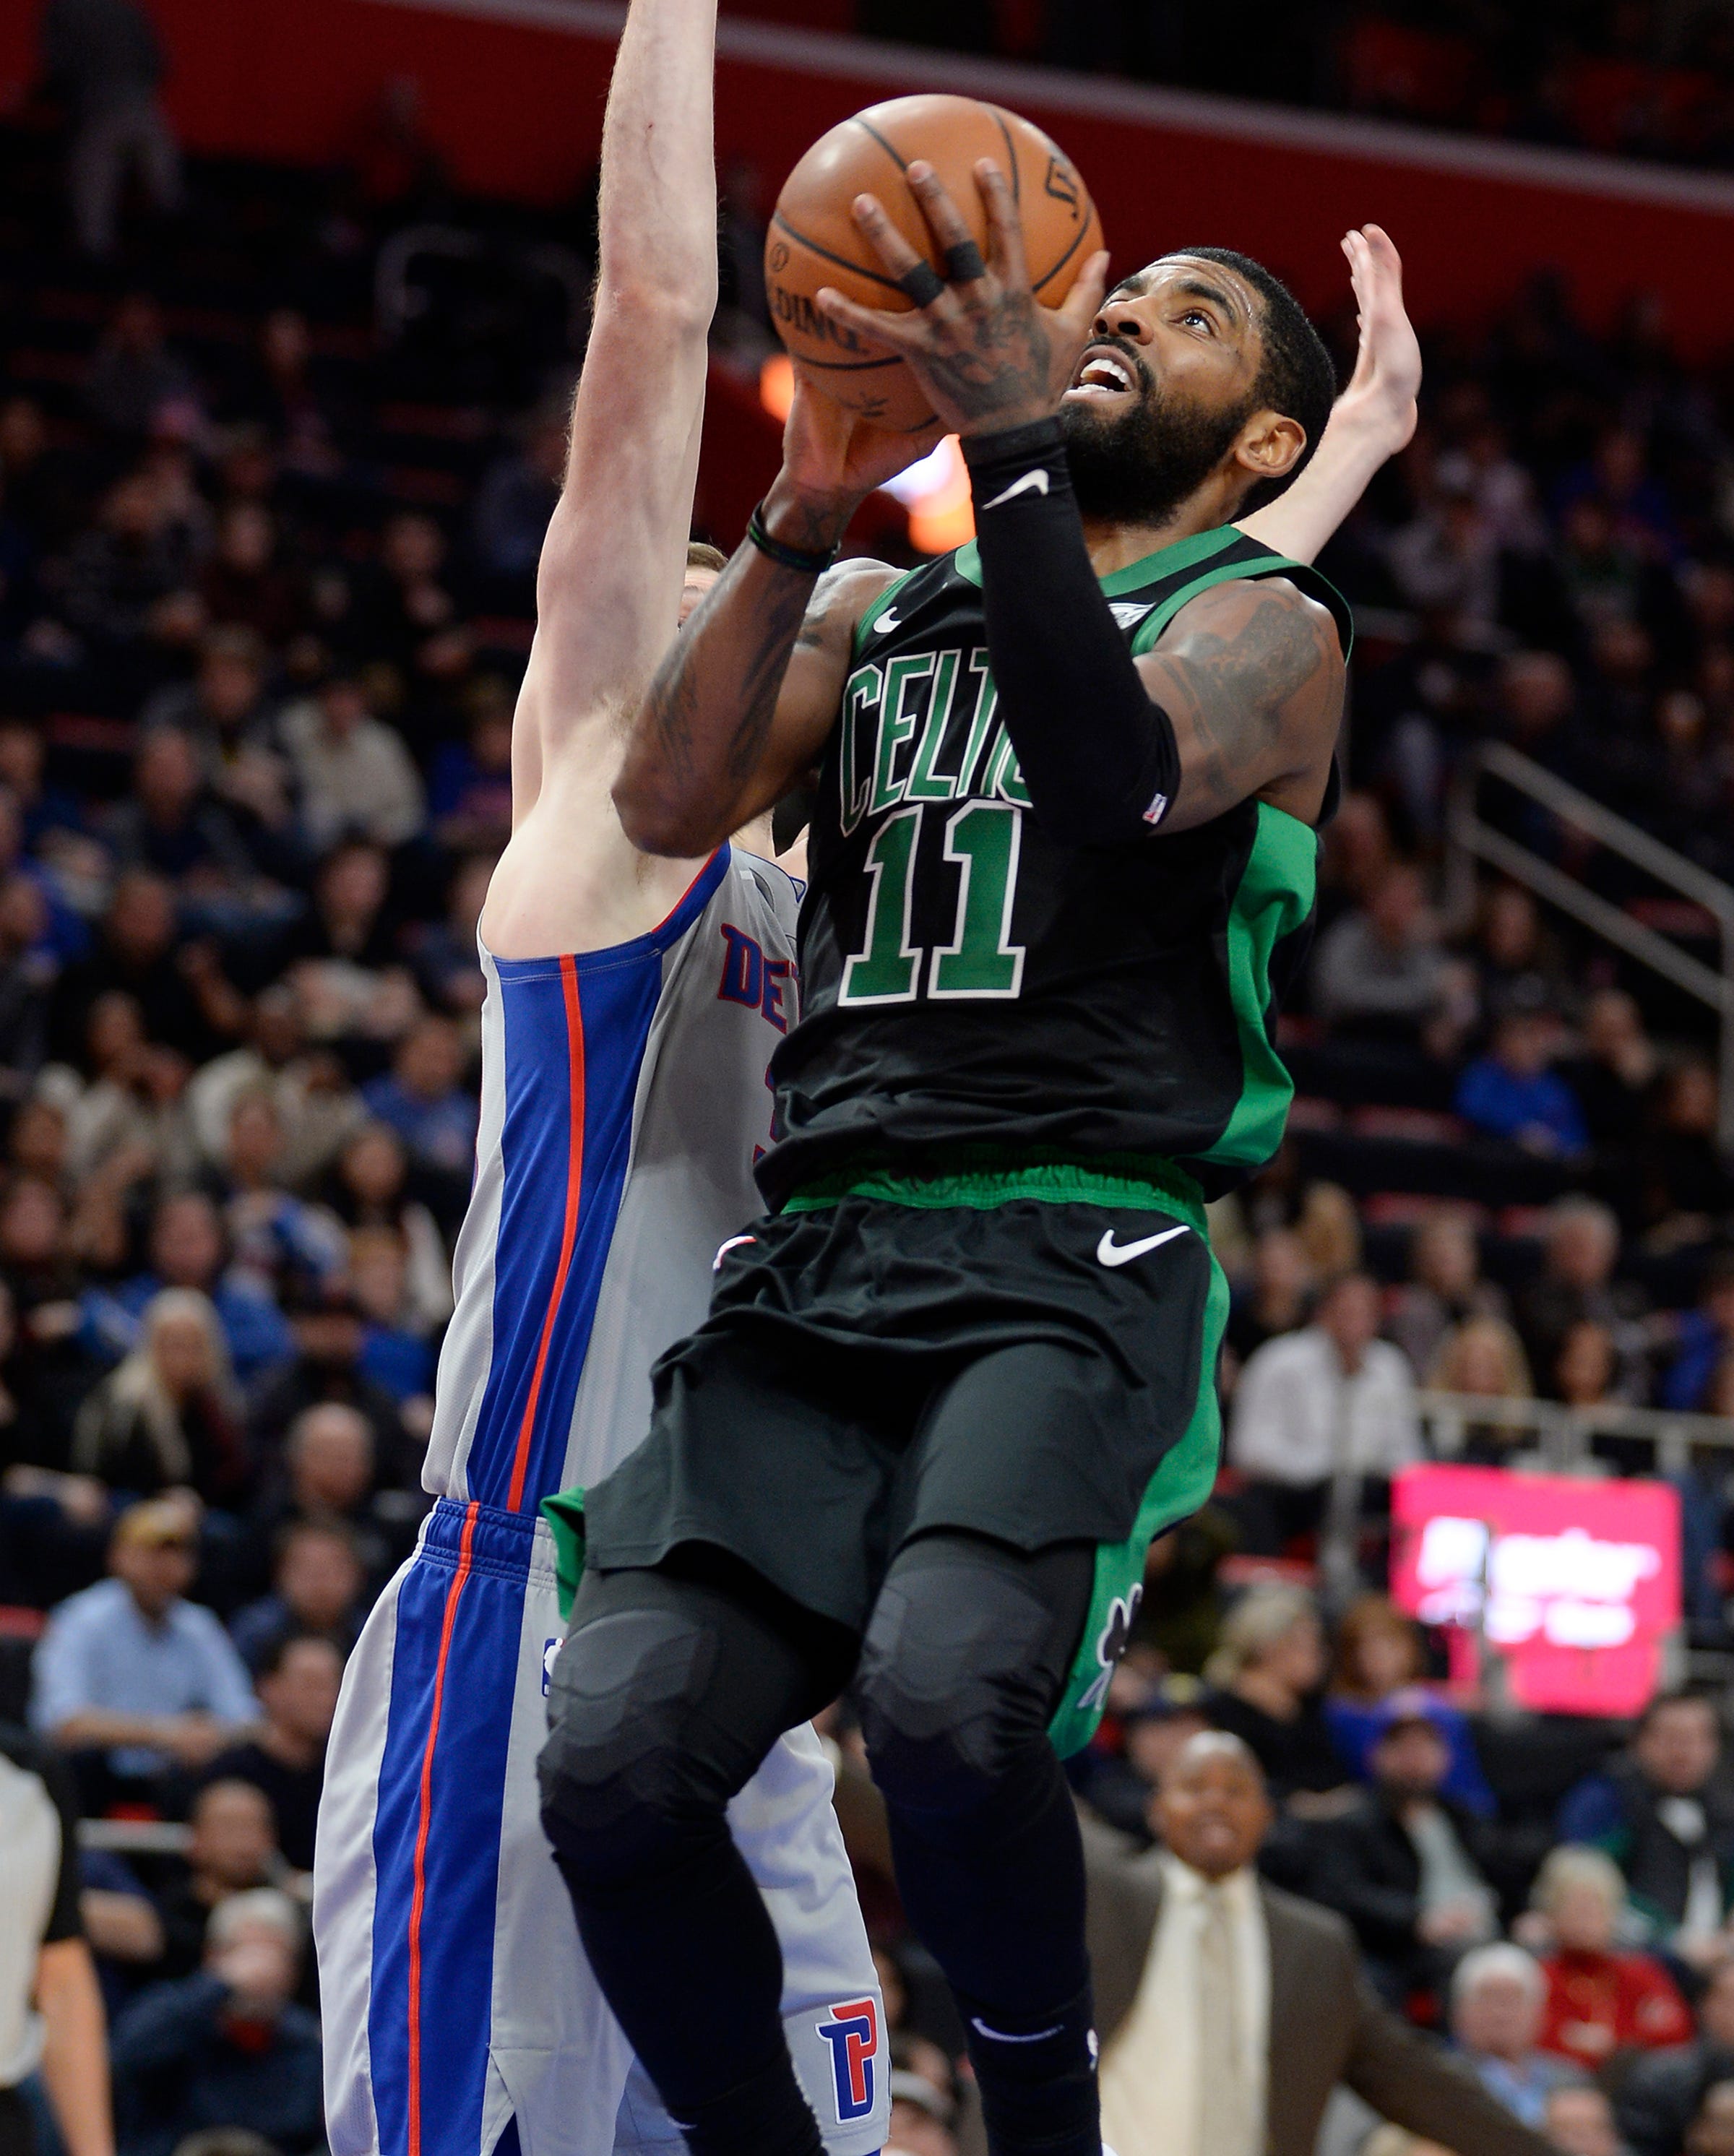 Celtics ' Kyrie Irving scores over Pistons ' Jon Leuer in the first quarter.